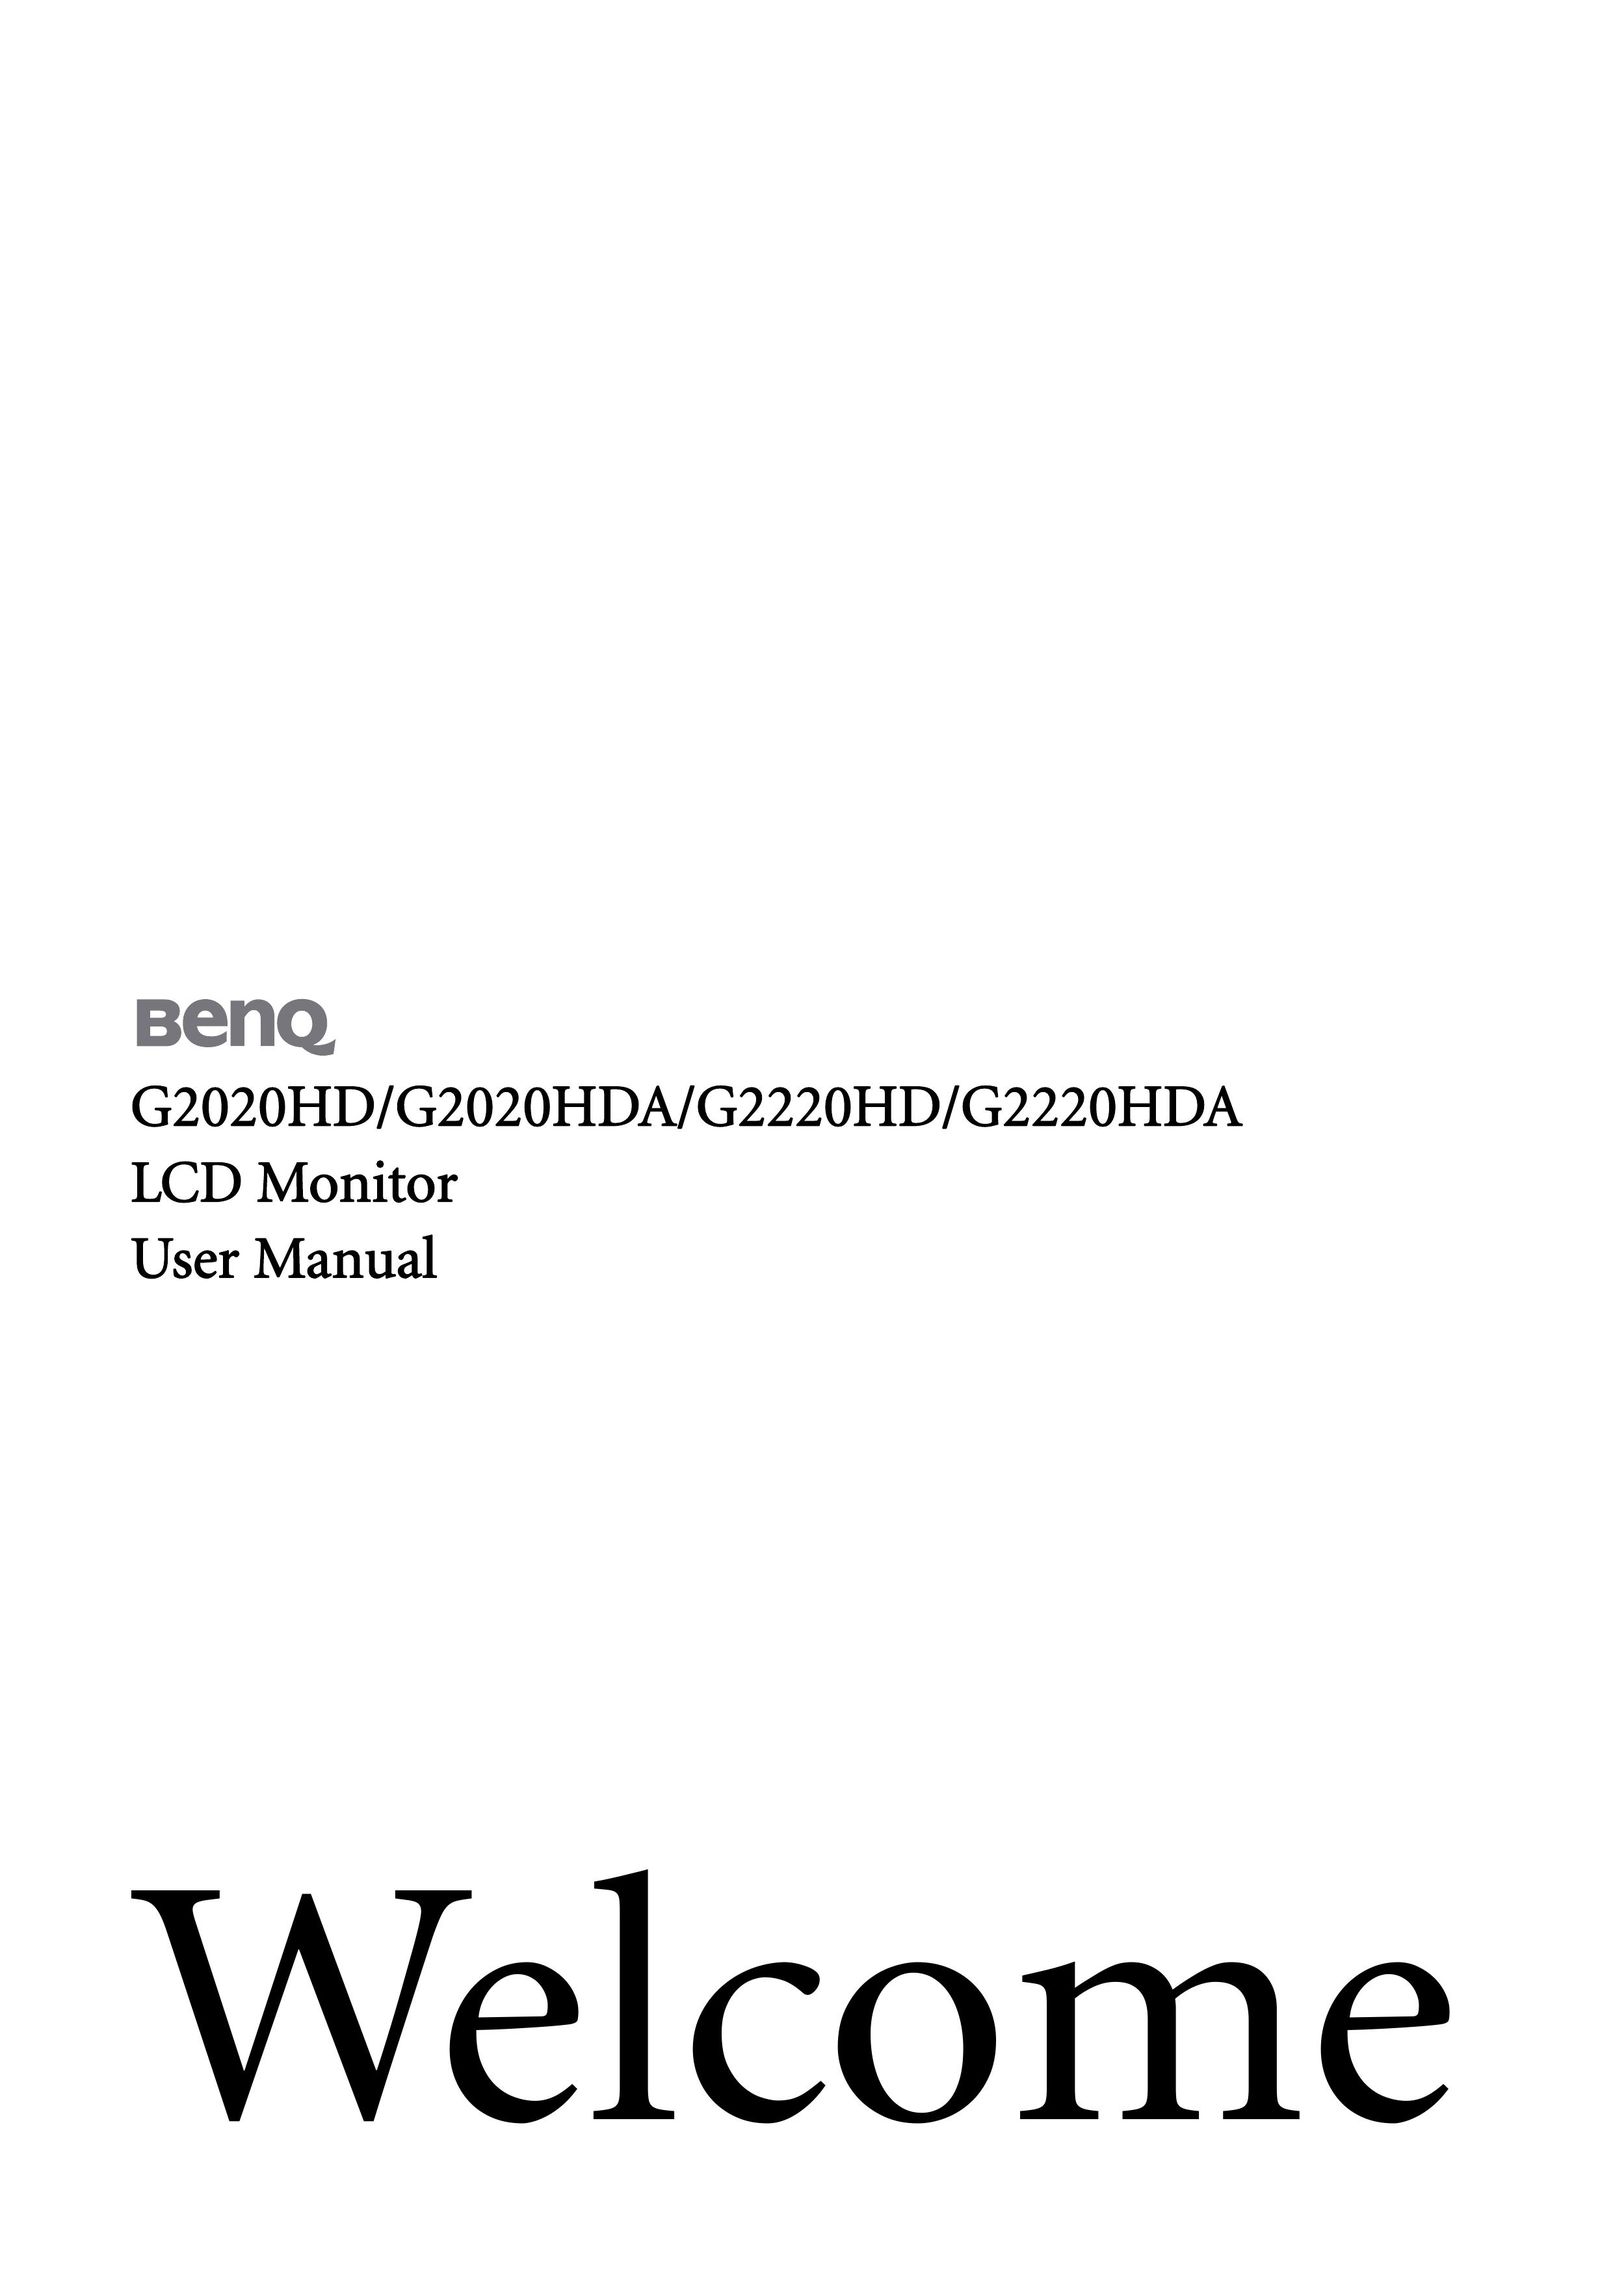 BenQ G2020HDA Computer Monitor User Manual